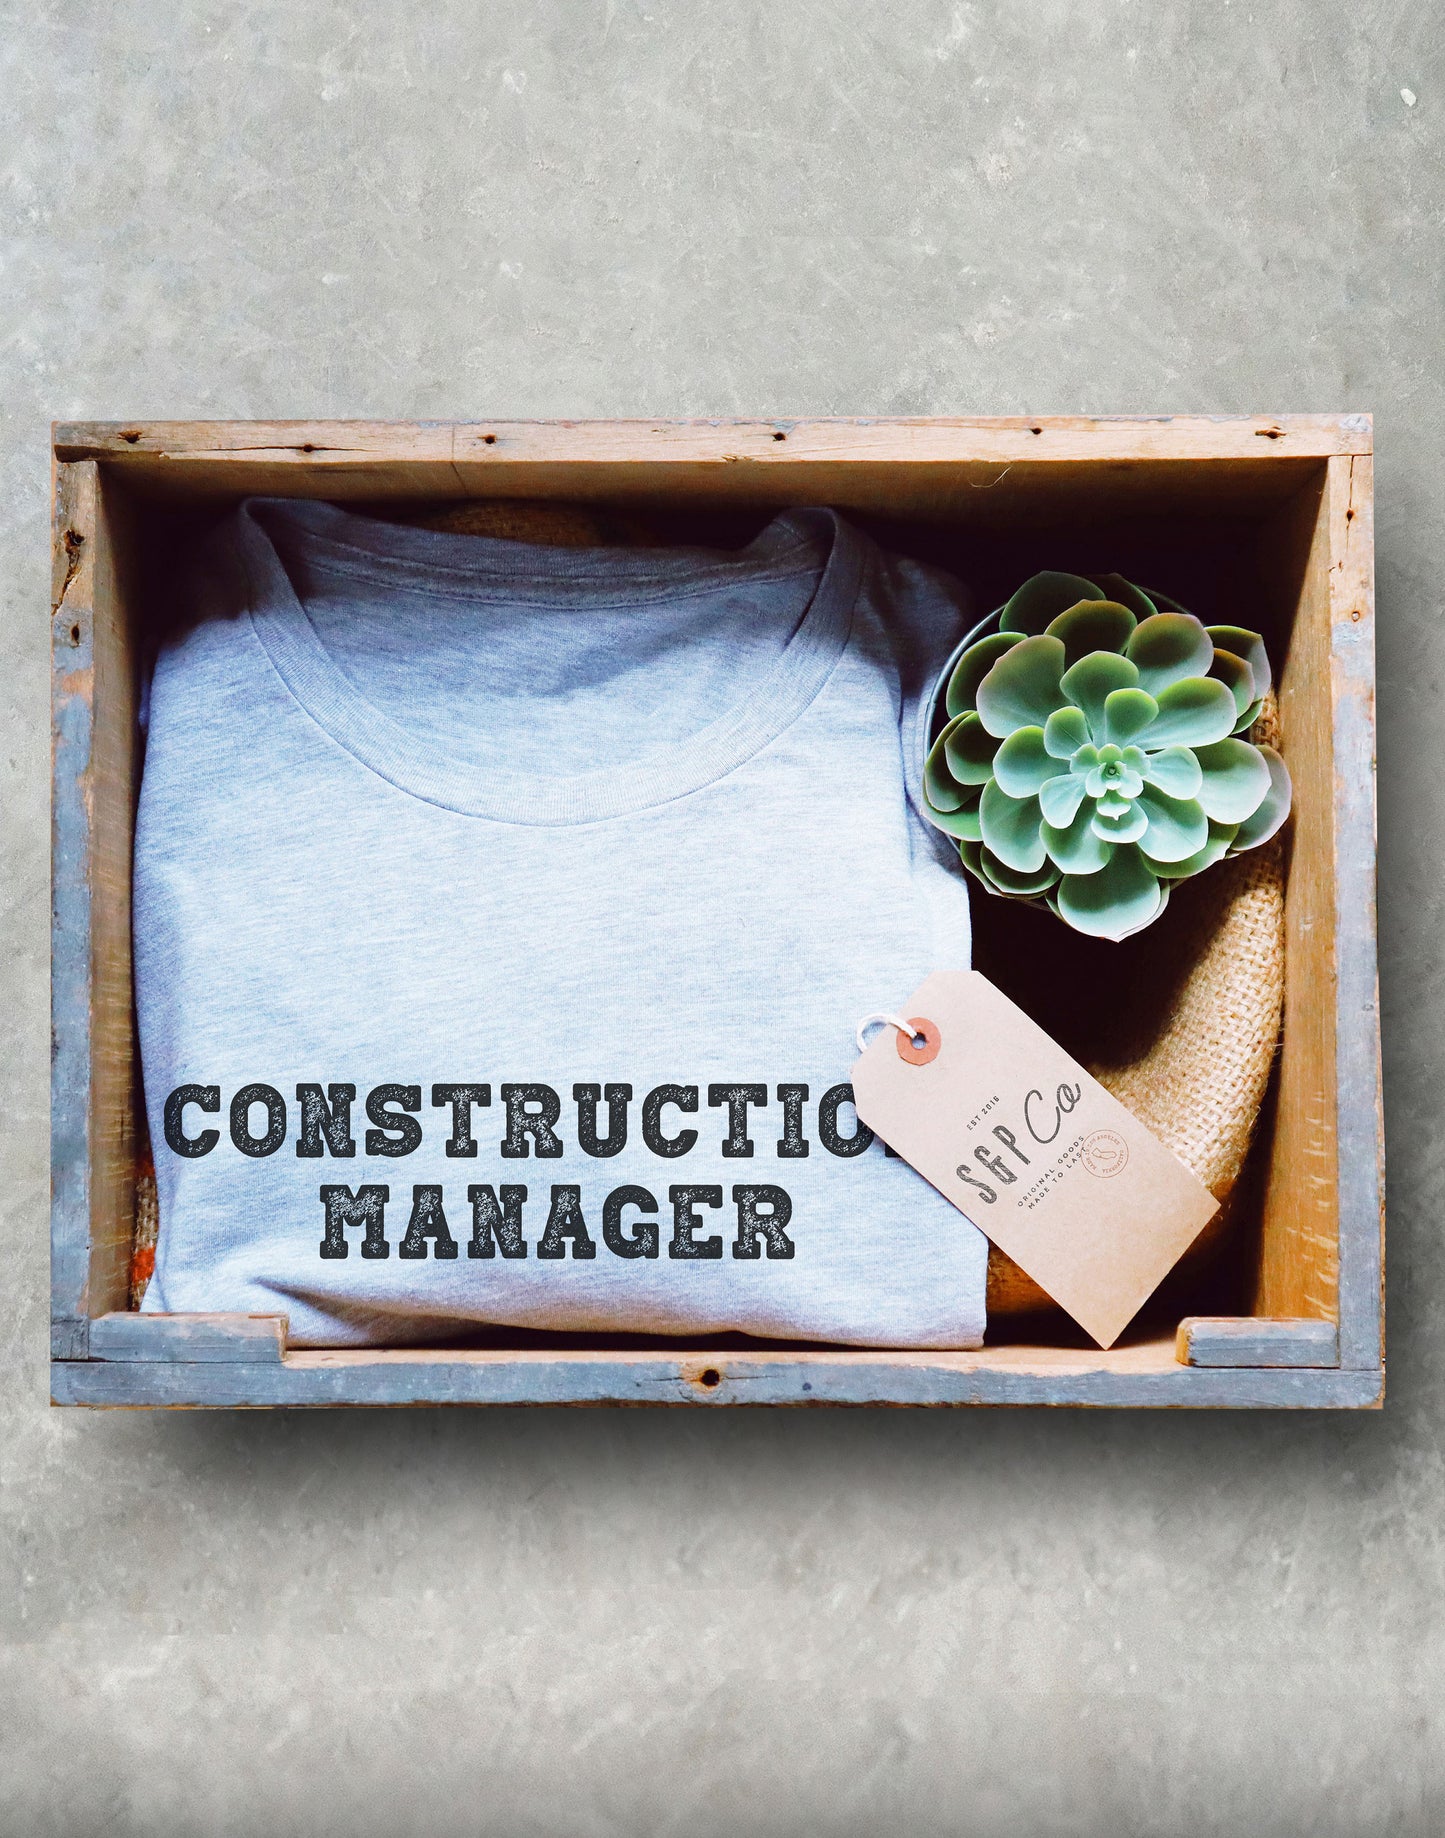 Construction Manager Unisex Shirt - Construction Shirt, Contractor Shirt, Construction Party, Builder Shirt, Fathers Day Shirt, Demolition